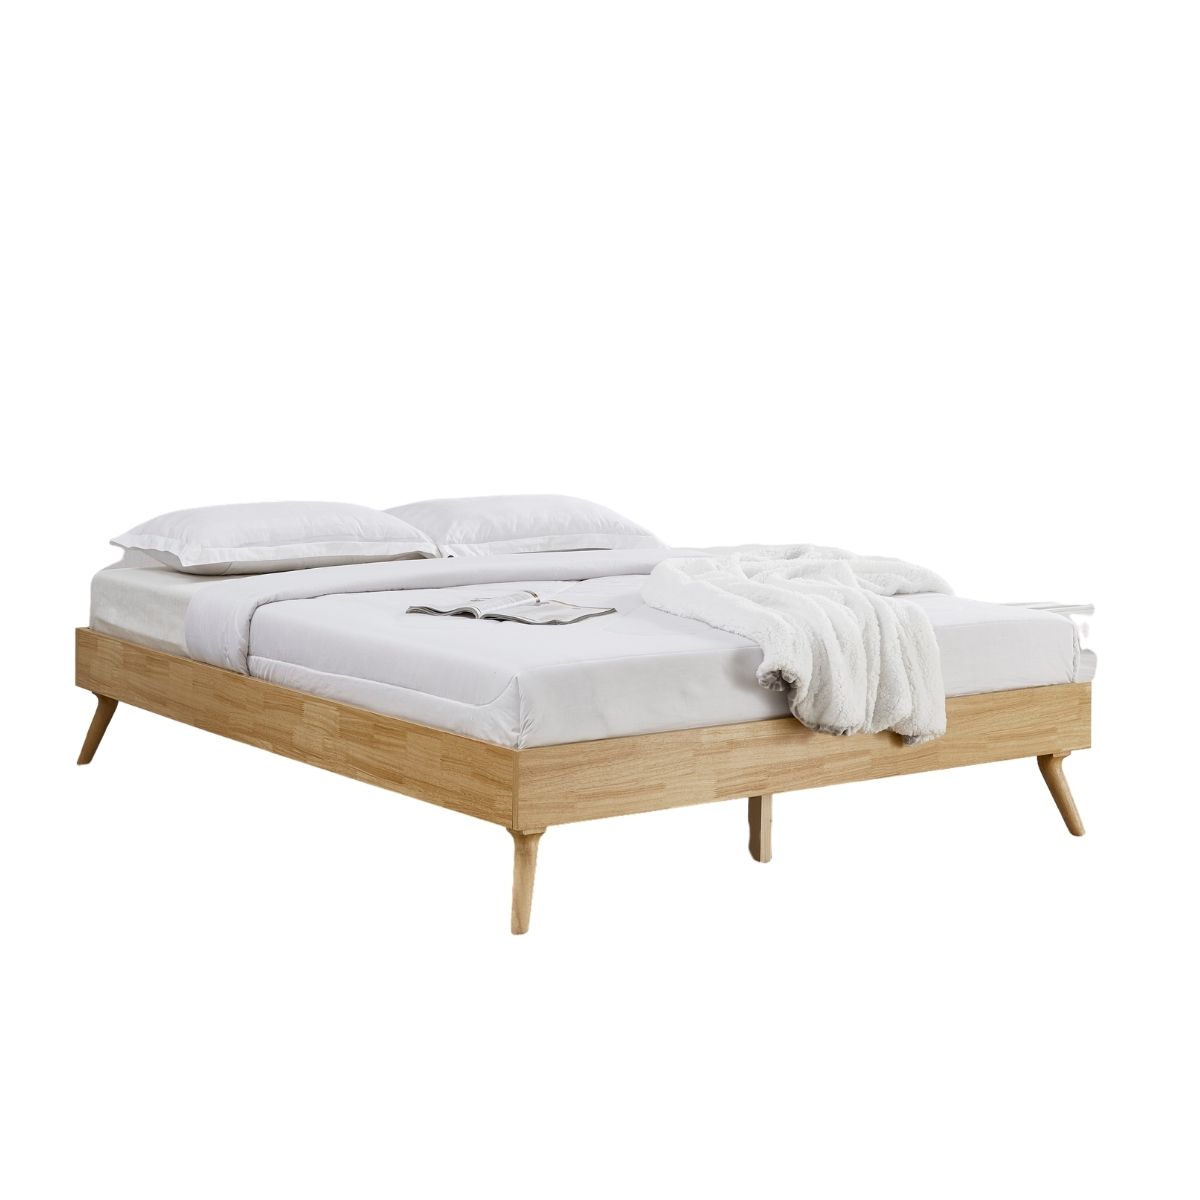 Timea Ensemble Bed Frame Wooden Slat - Natural Oak Queen